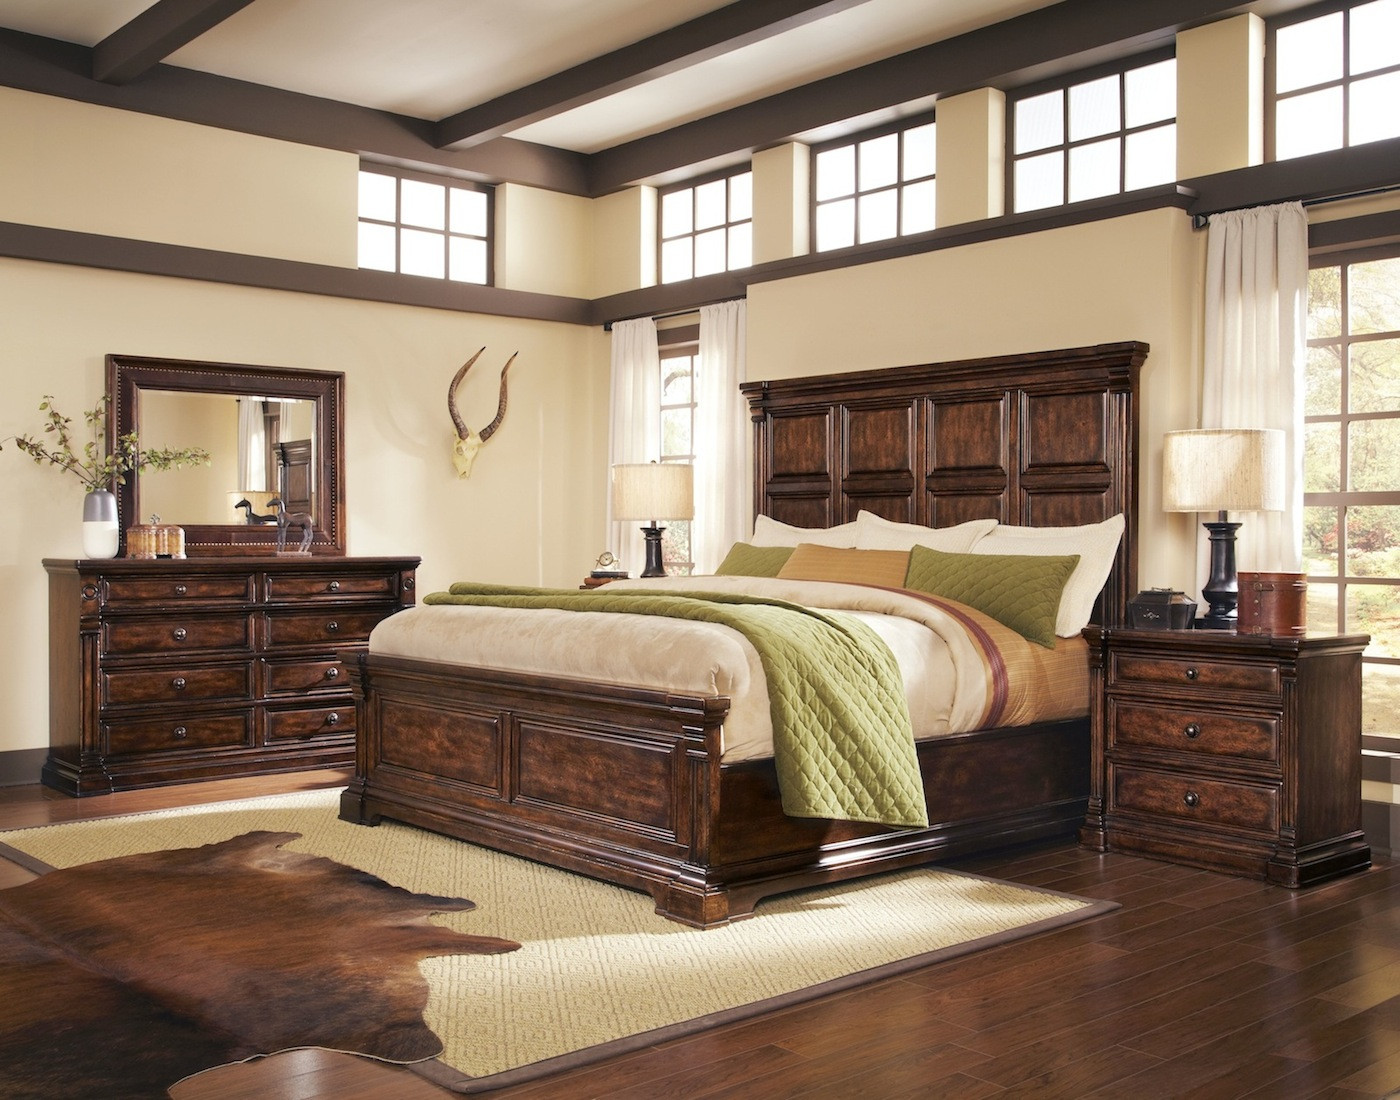 Rustic Bedroom Furniture Sets
 Whiskey Oak Rustic Inspired Wooden Panel Bedroom Set